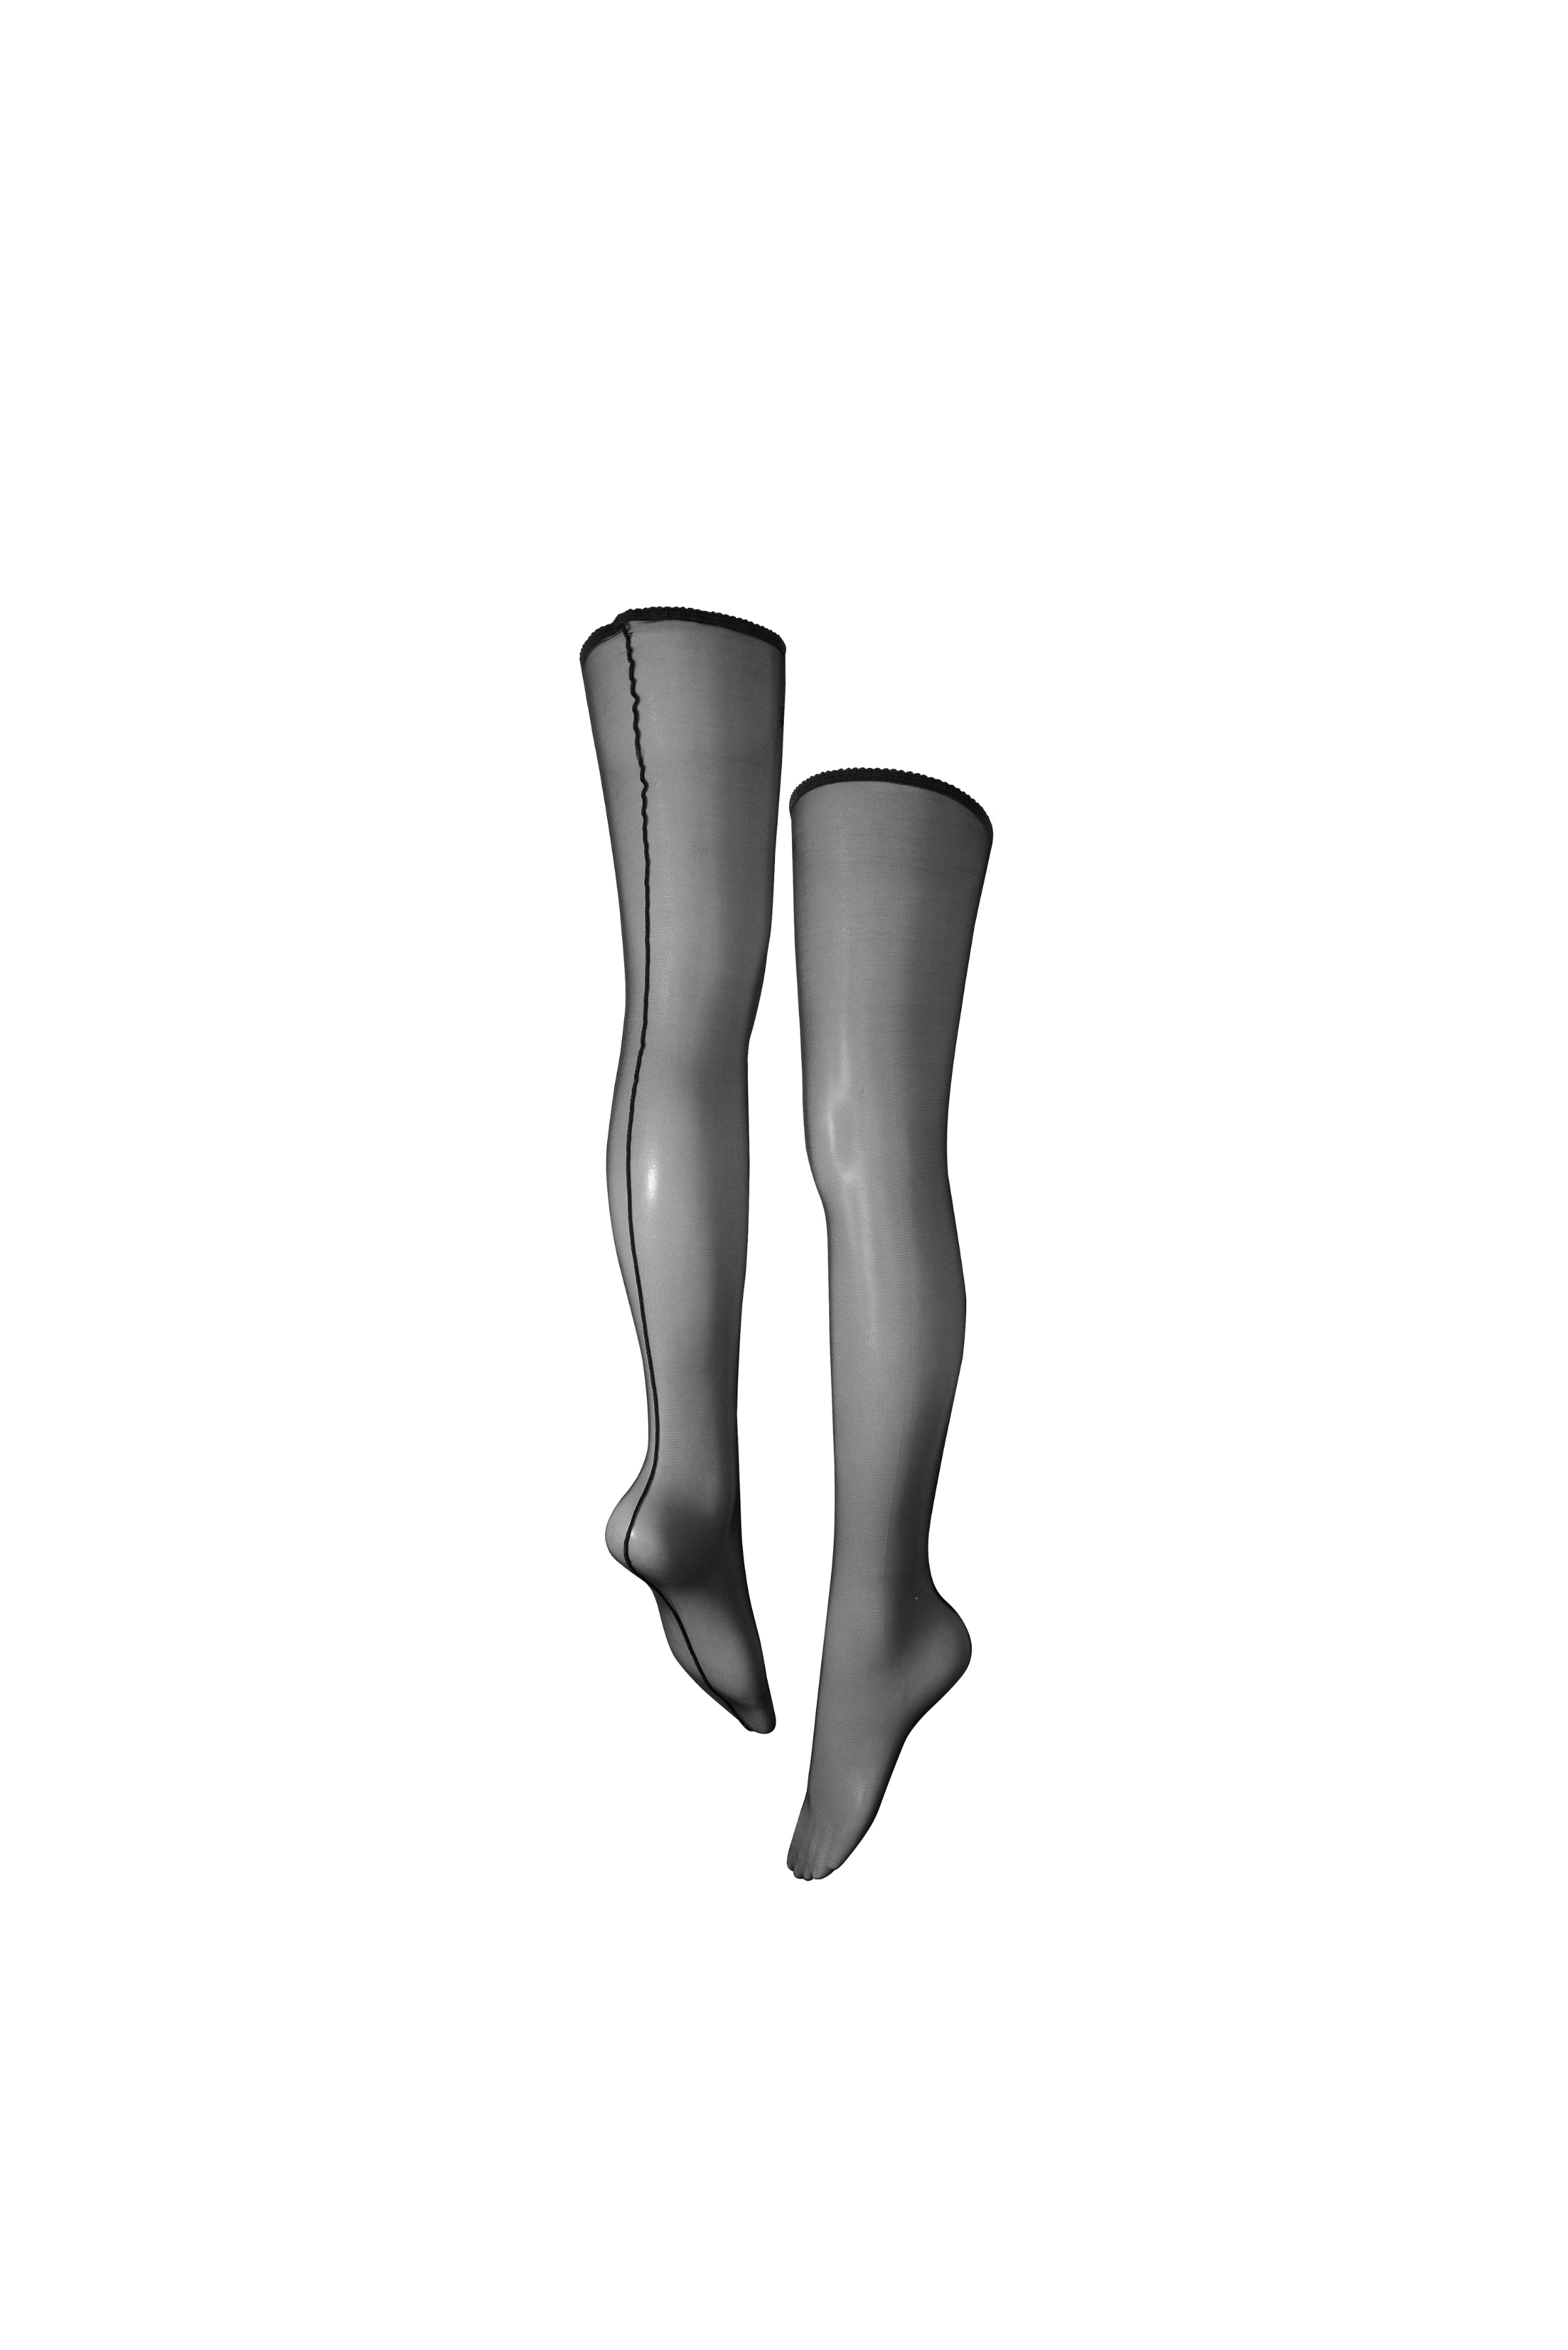 Khloe's stockings